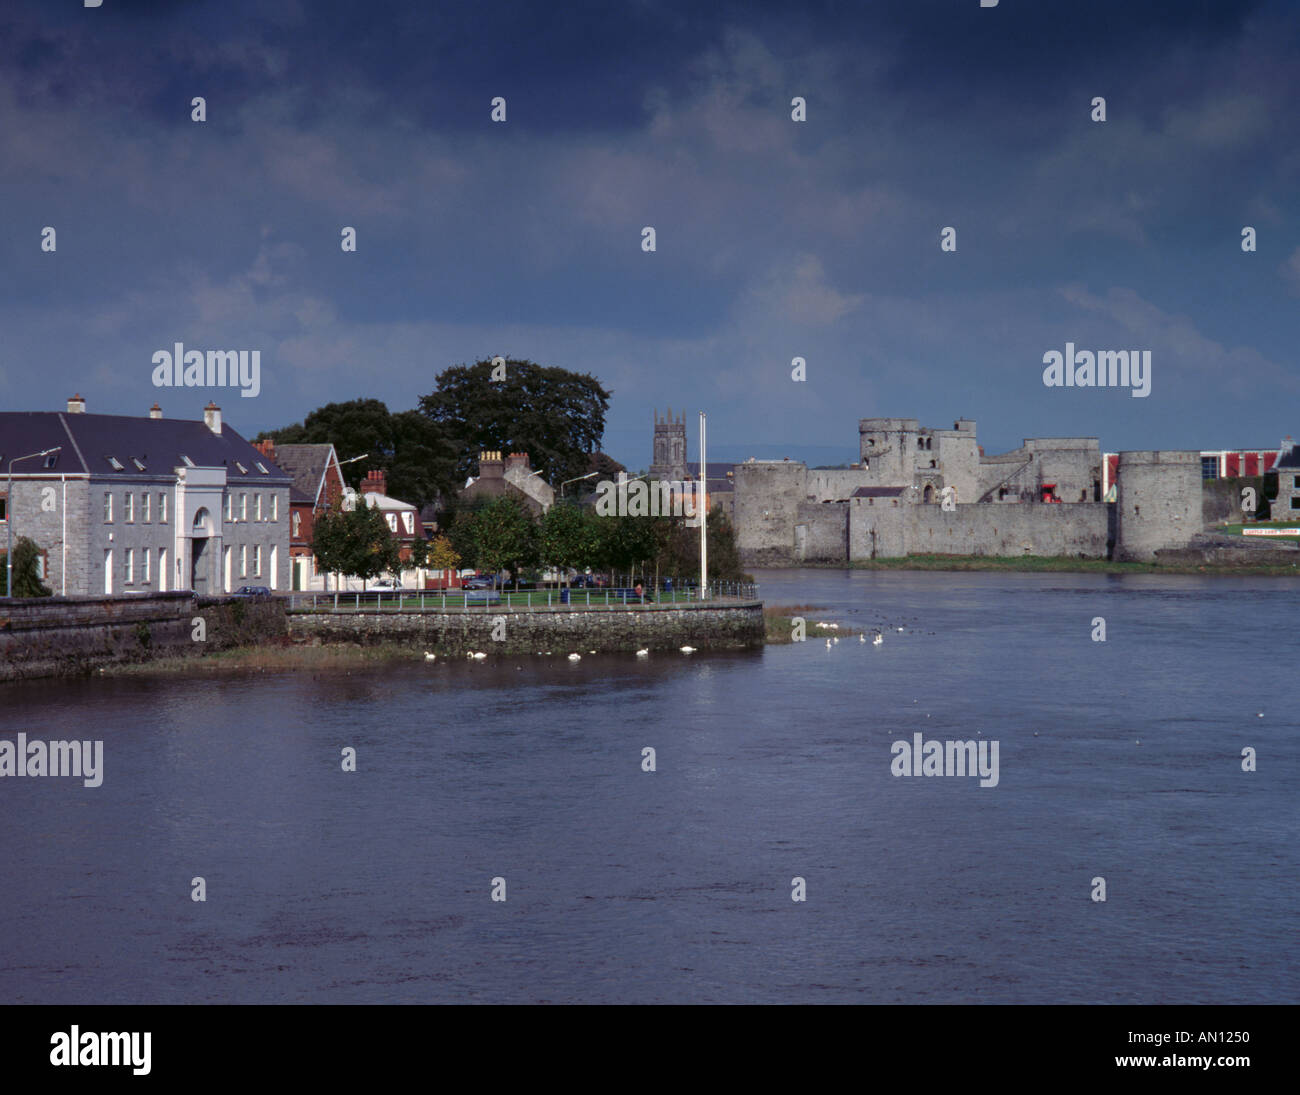 King John's Castle seen over the River Shannon, Limerick, County Limerick, Eire (Ireland). Stock Photo